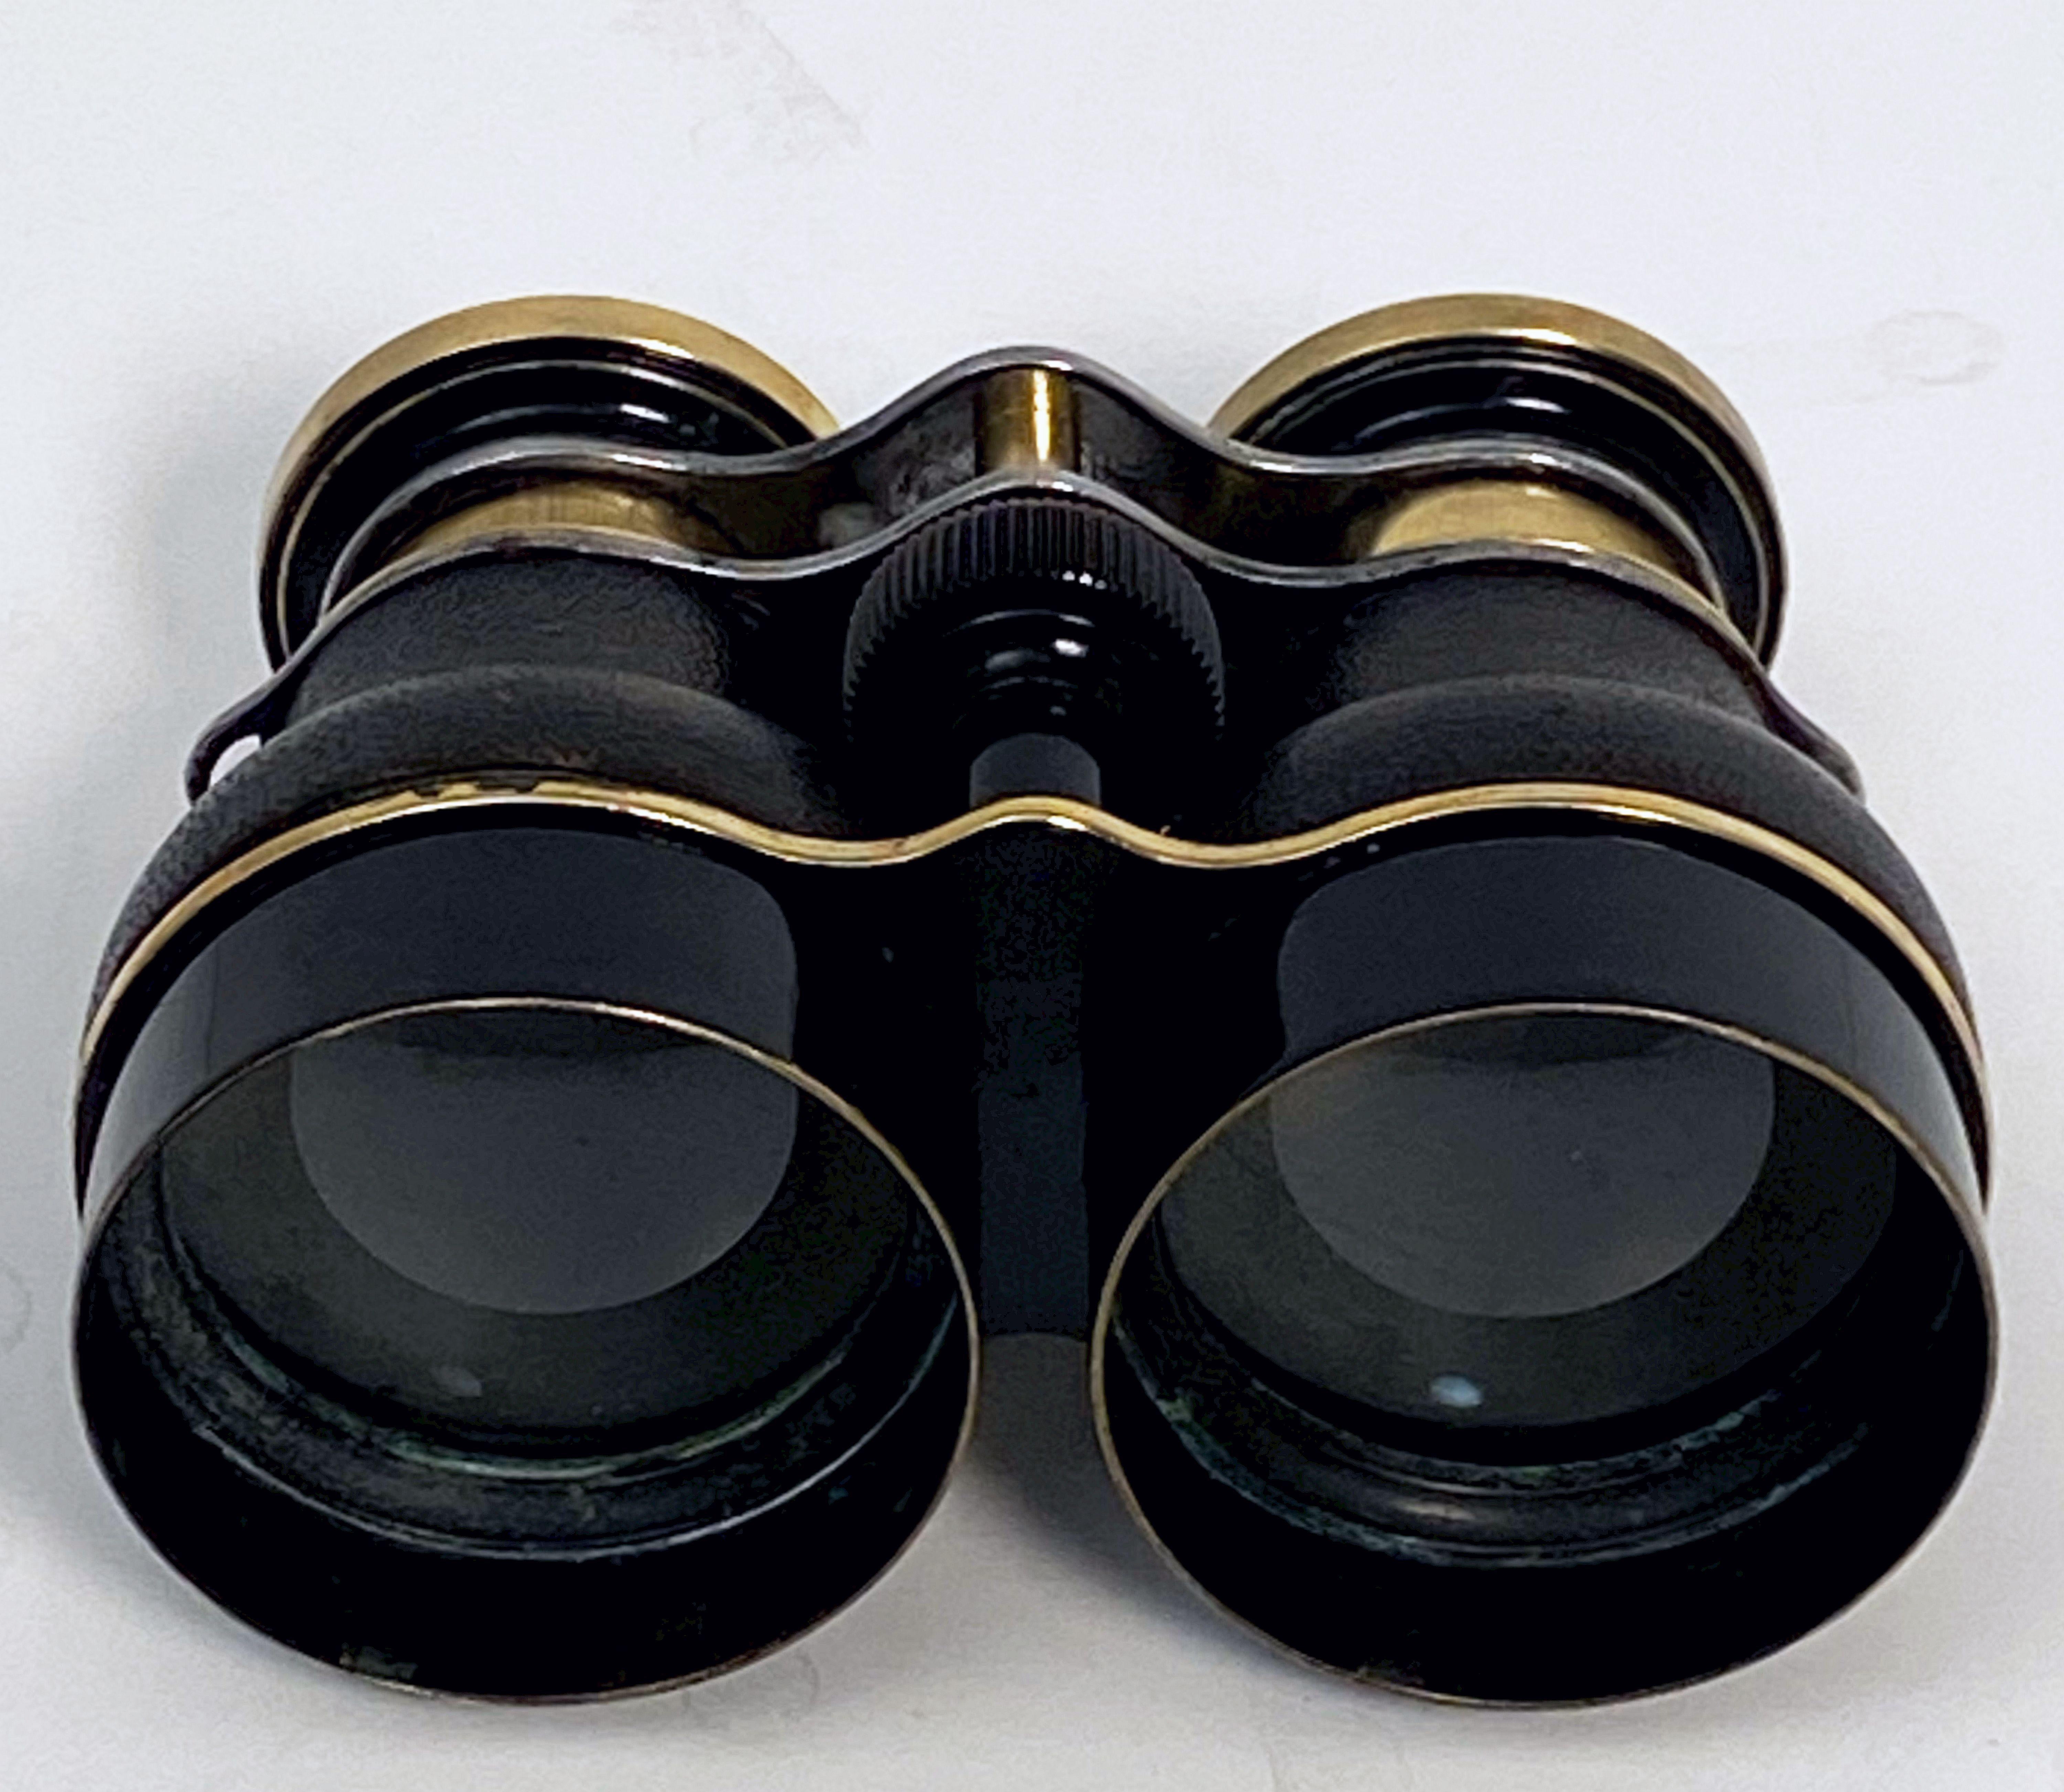 1920s binoculars